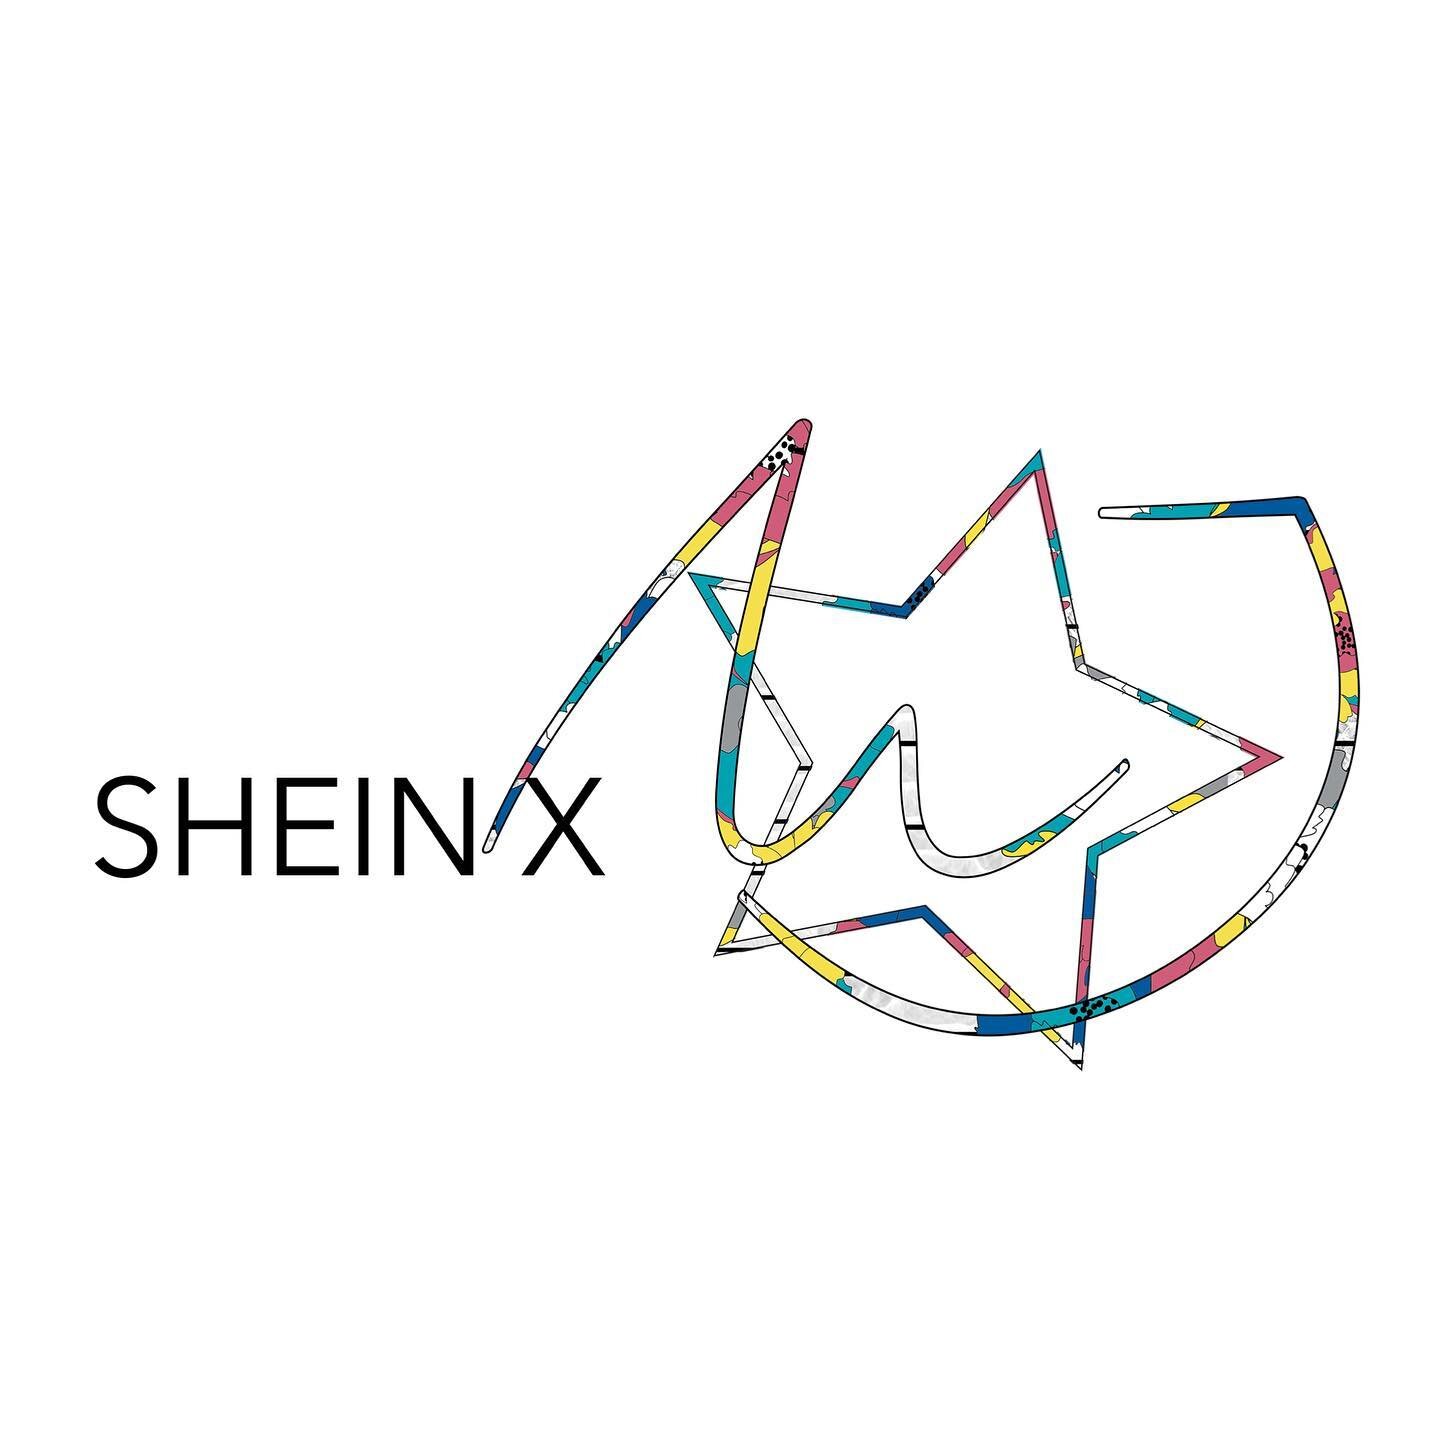 Shop #SHEINXMJ! Link in the bio!